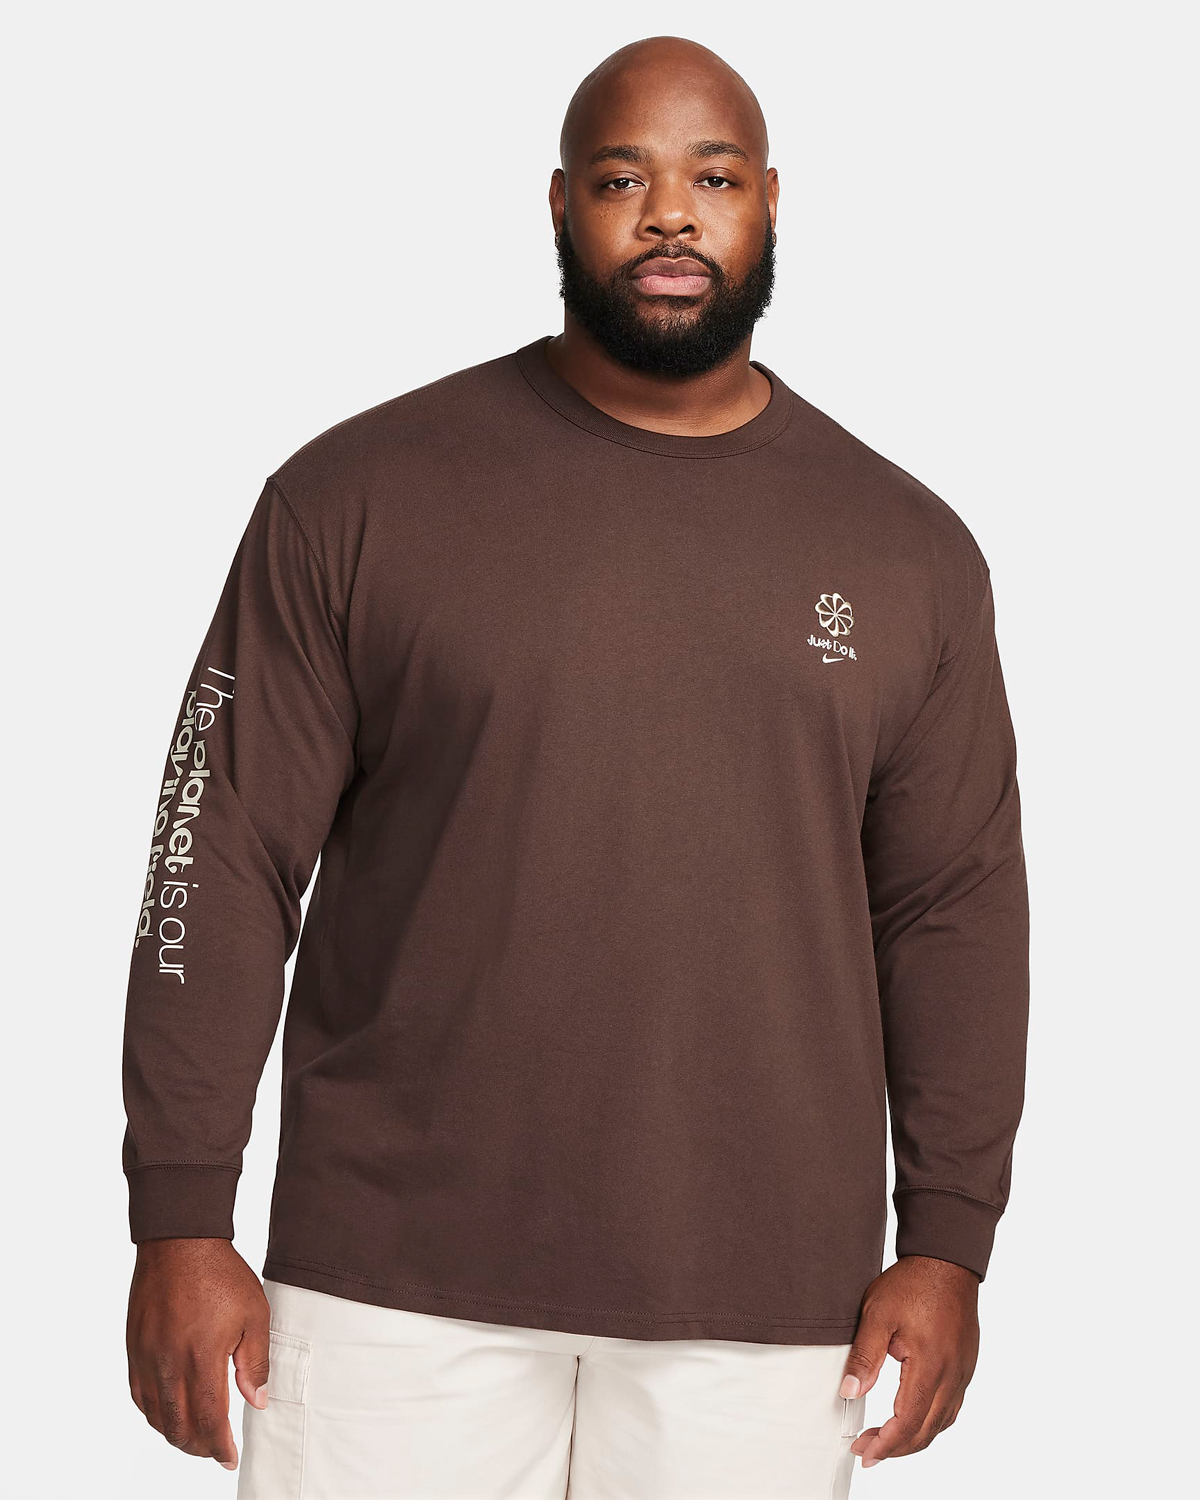 Nike-Sportswear-Max90-Long-Sleeve-T-Shirt-Baroque-Brown-1